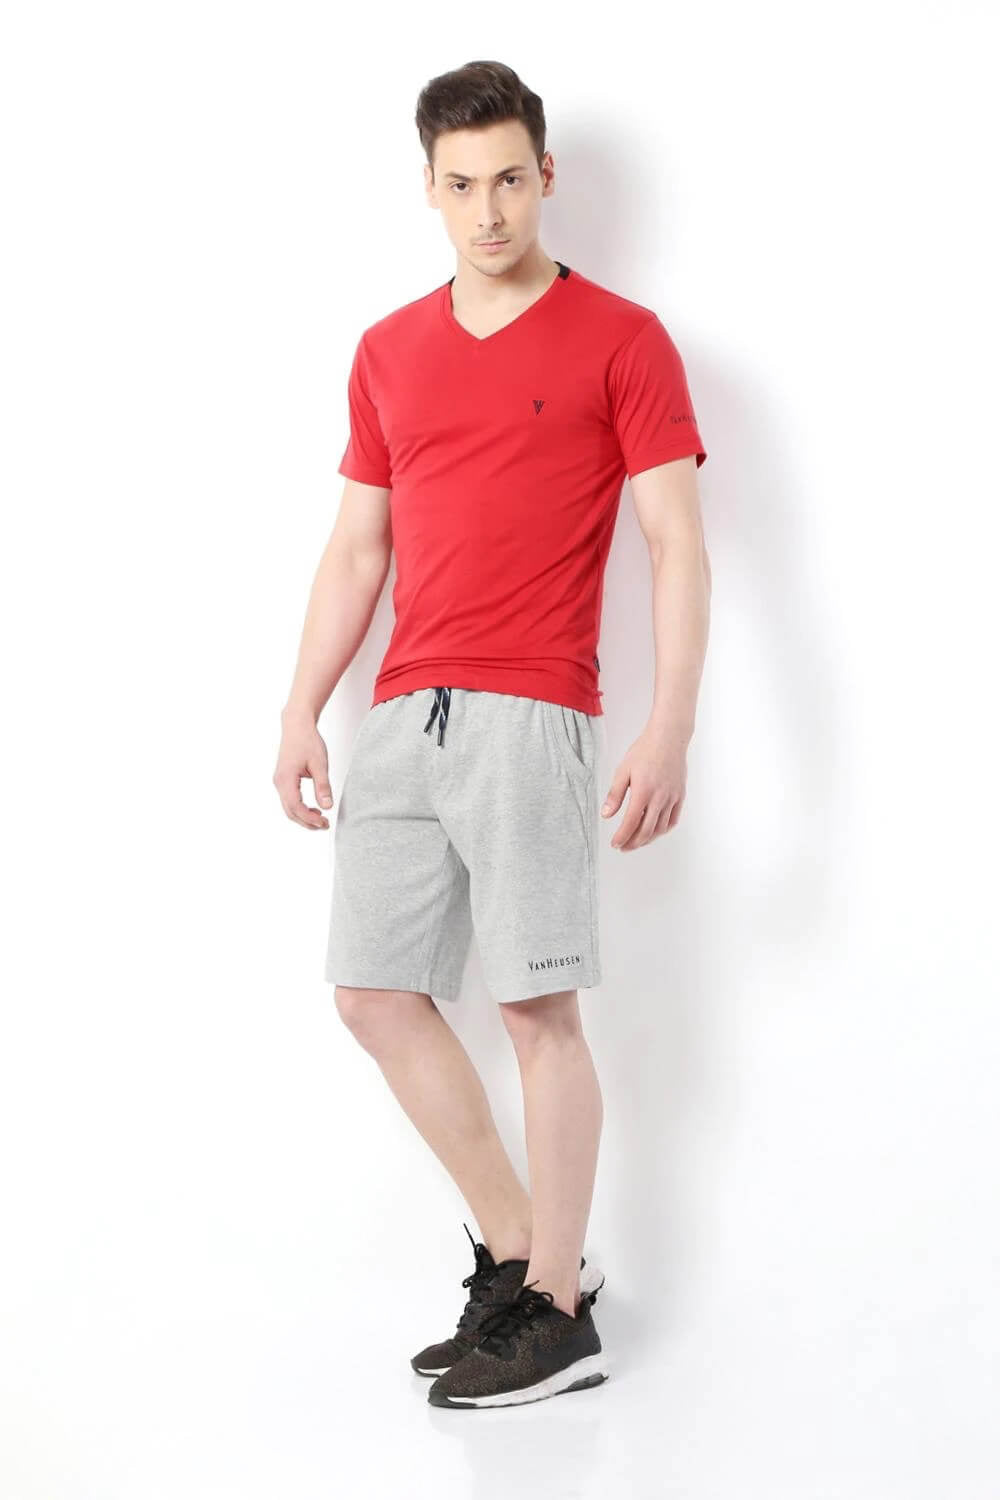 Van Heusen Grey Knit Shorts for Men #50001